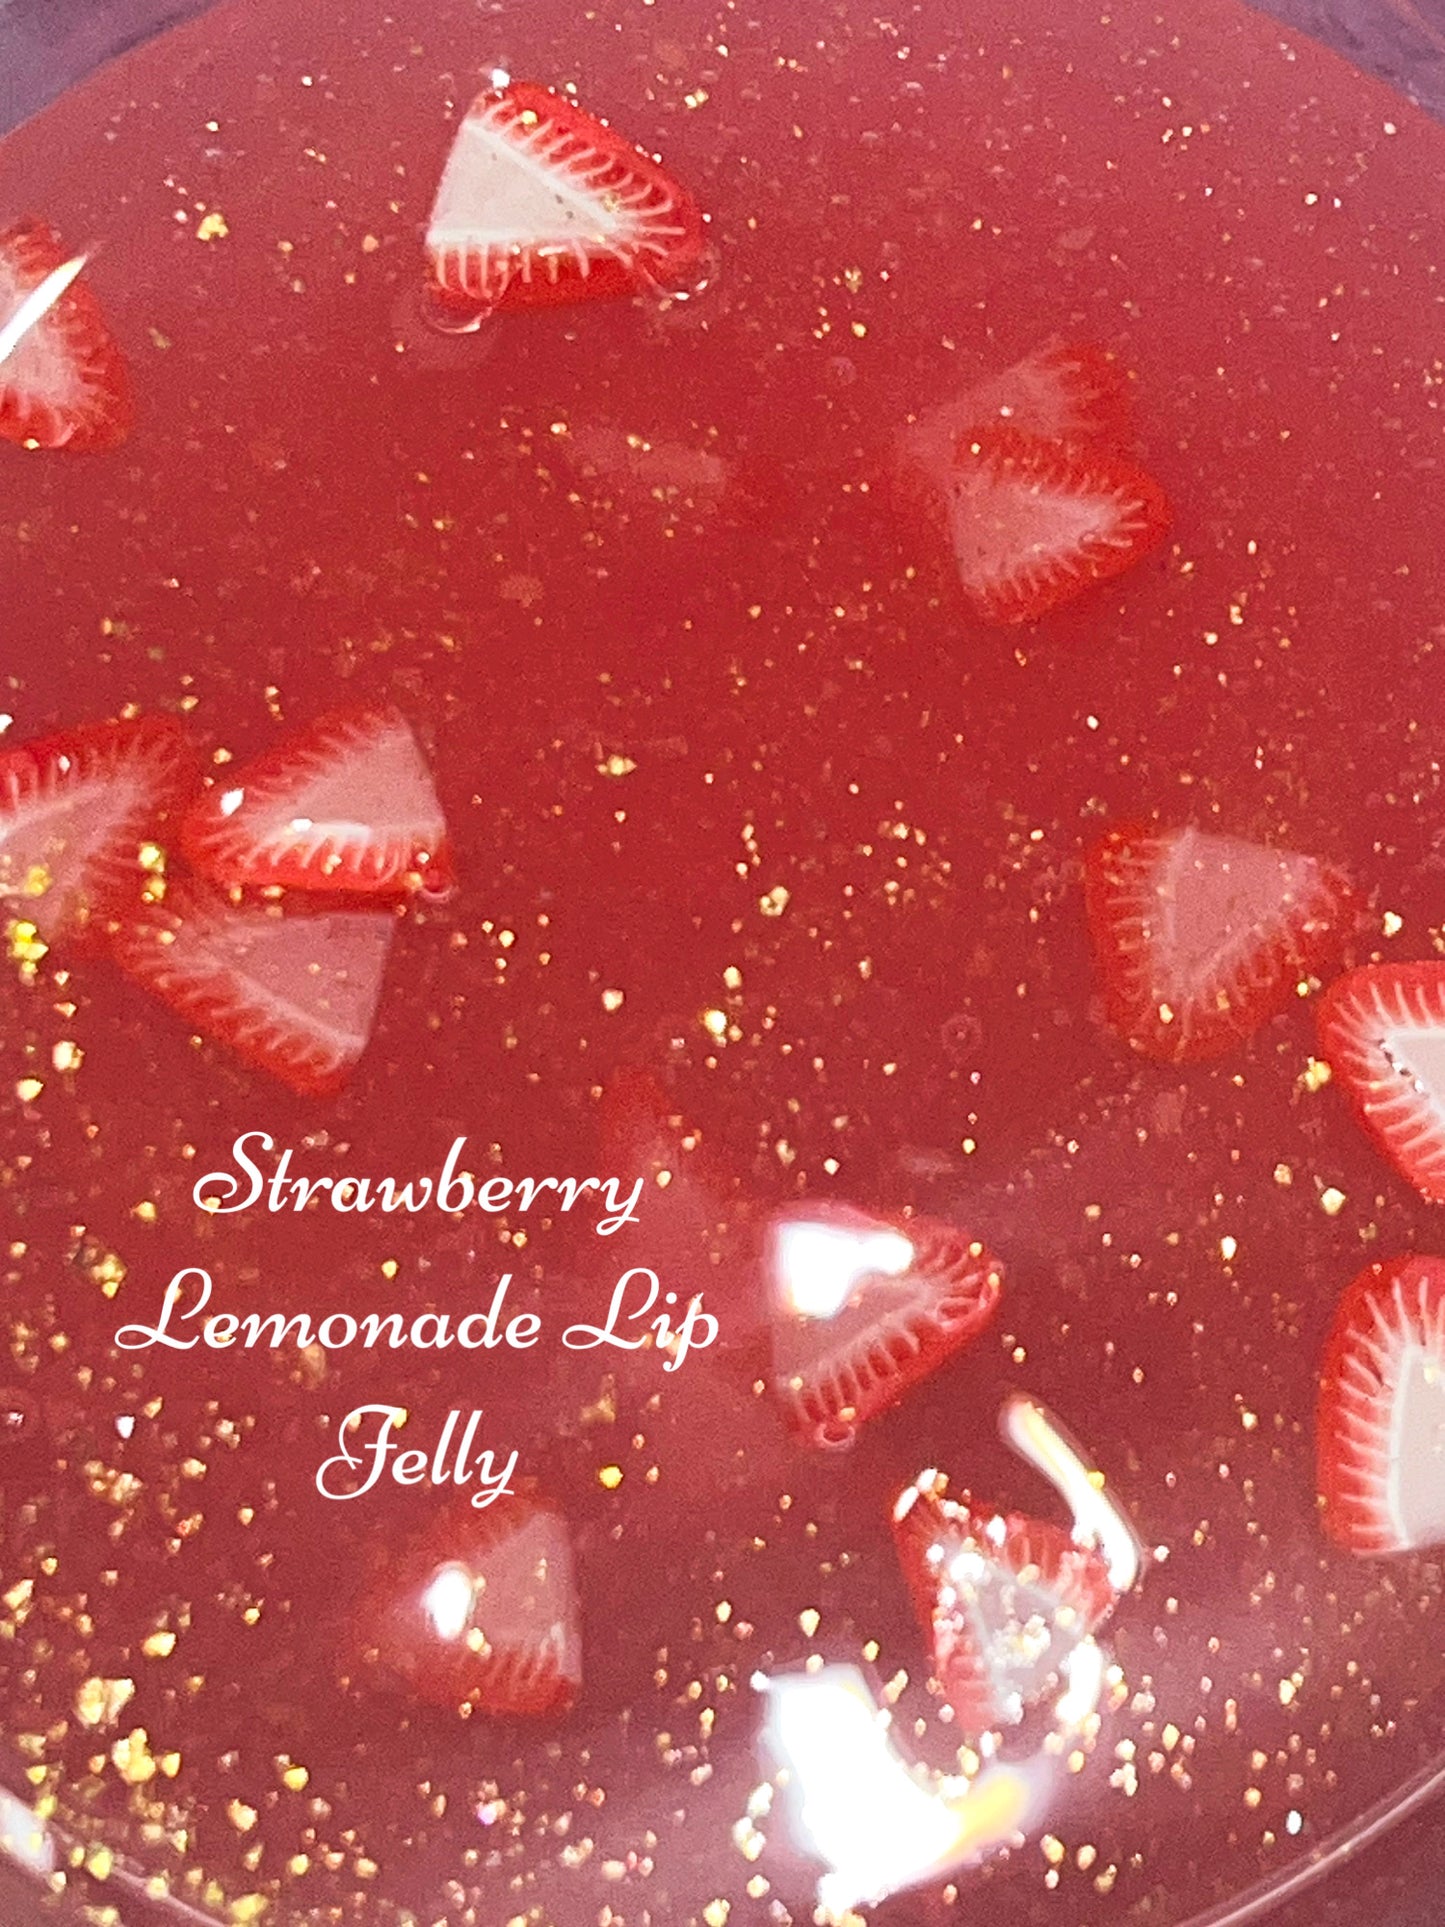 Strawberry Lemonade Lip Jelly